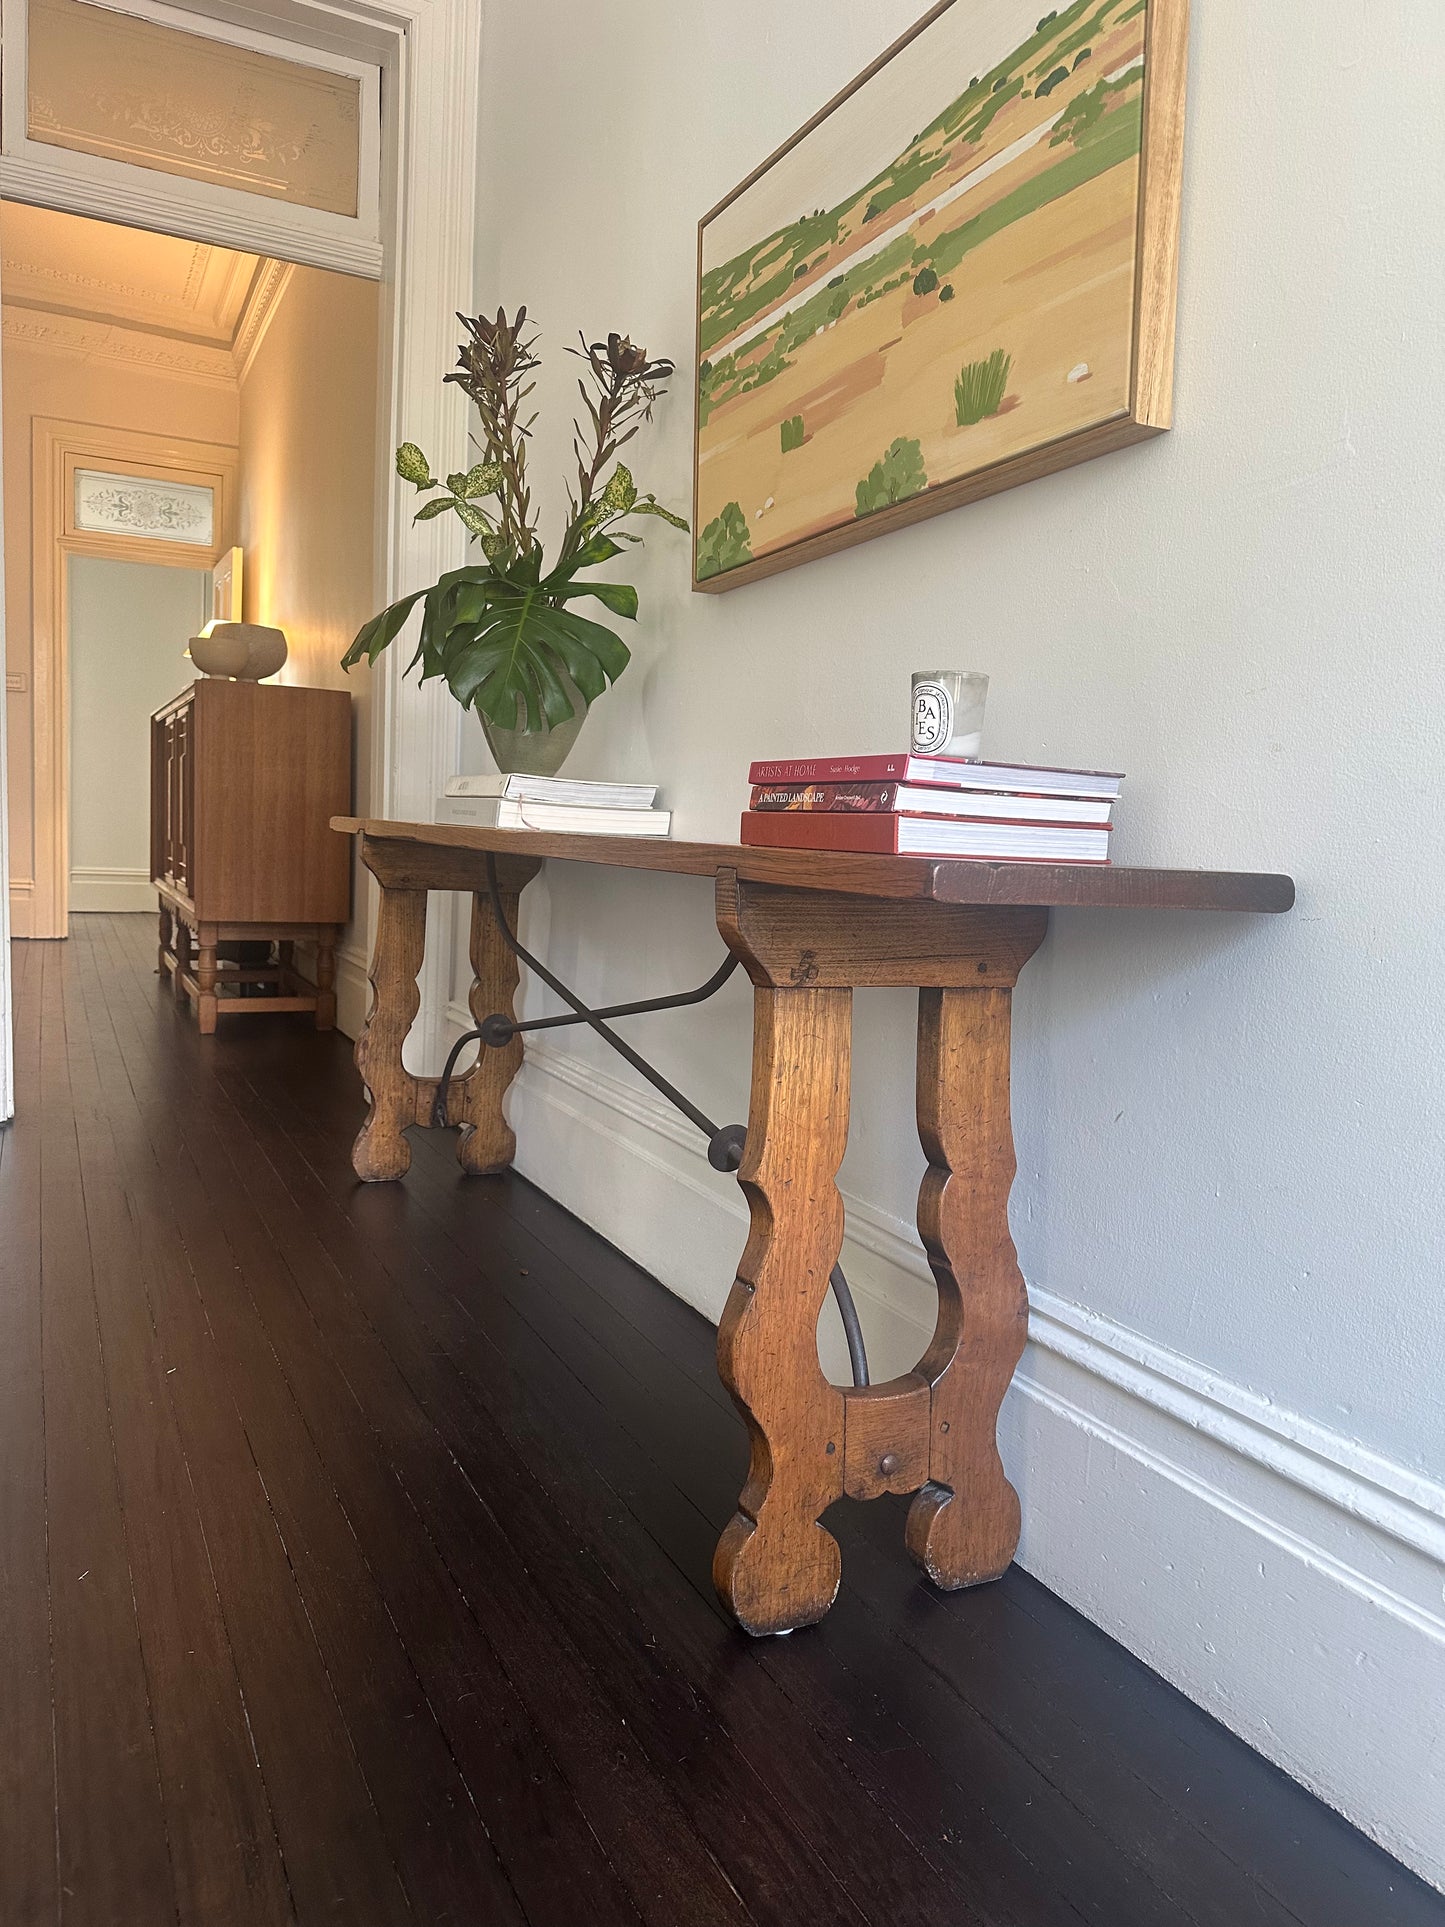 Spanish oak console or hallway table